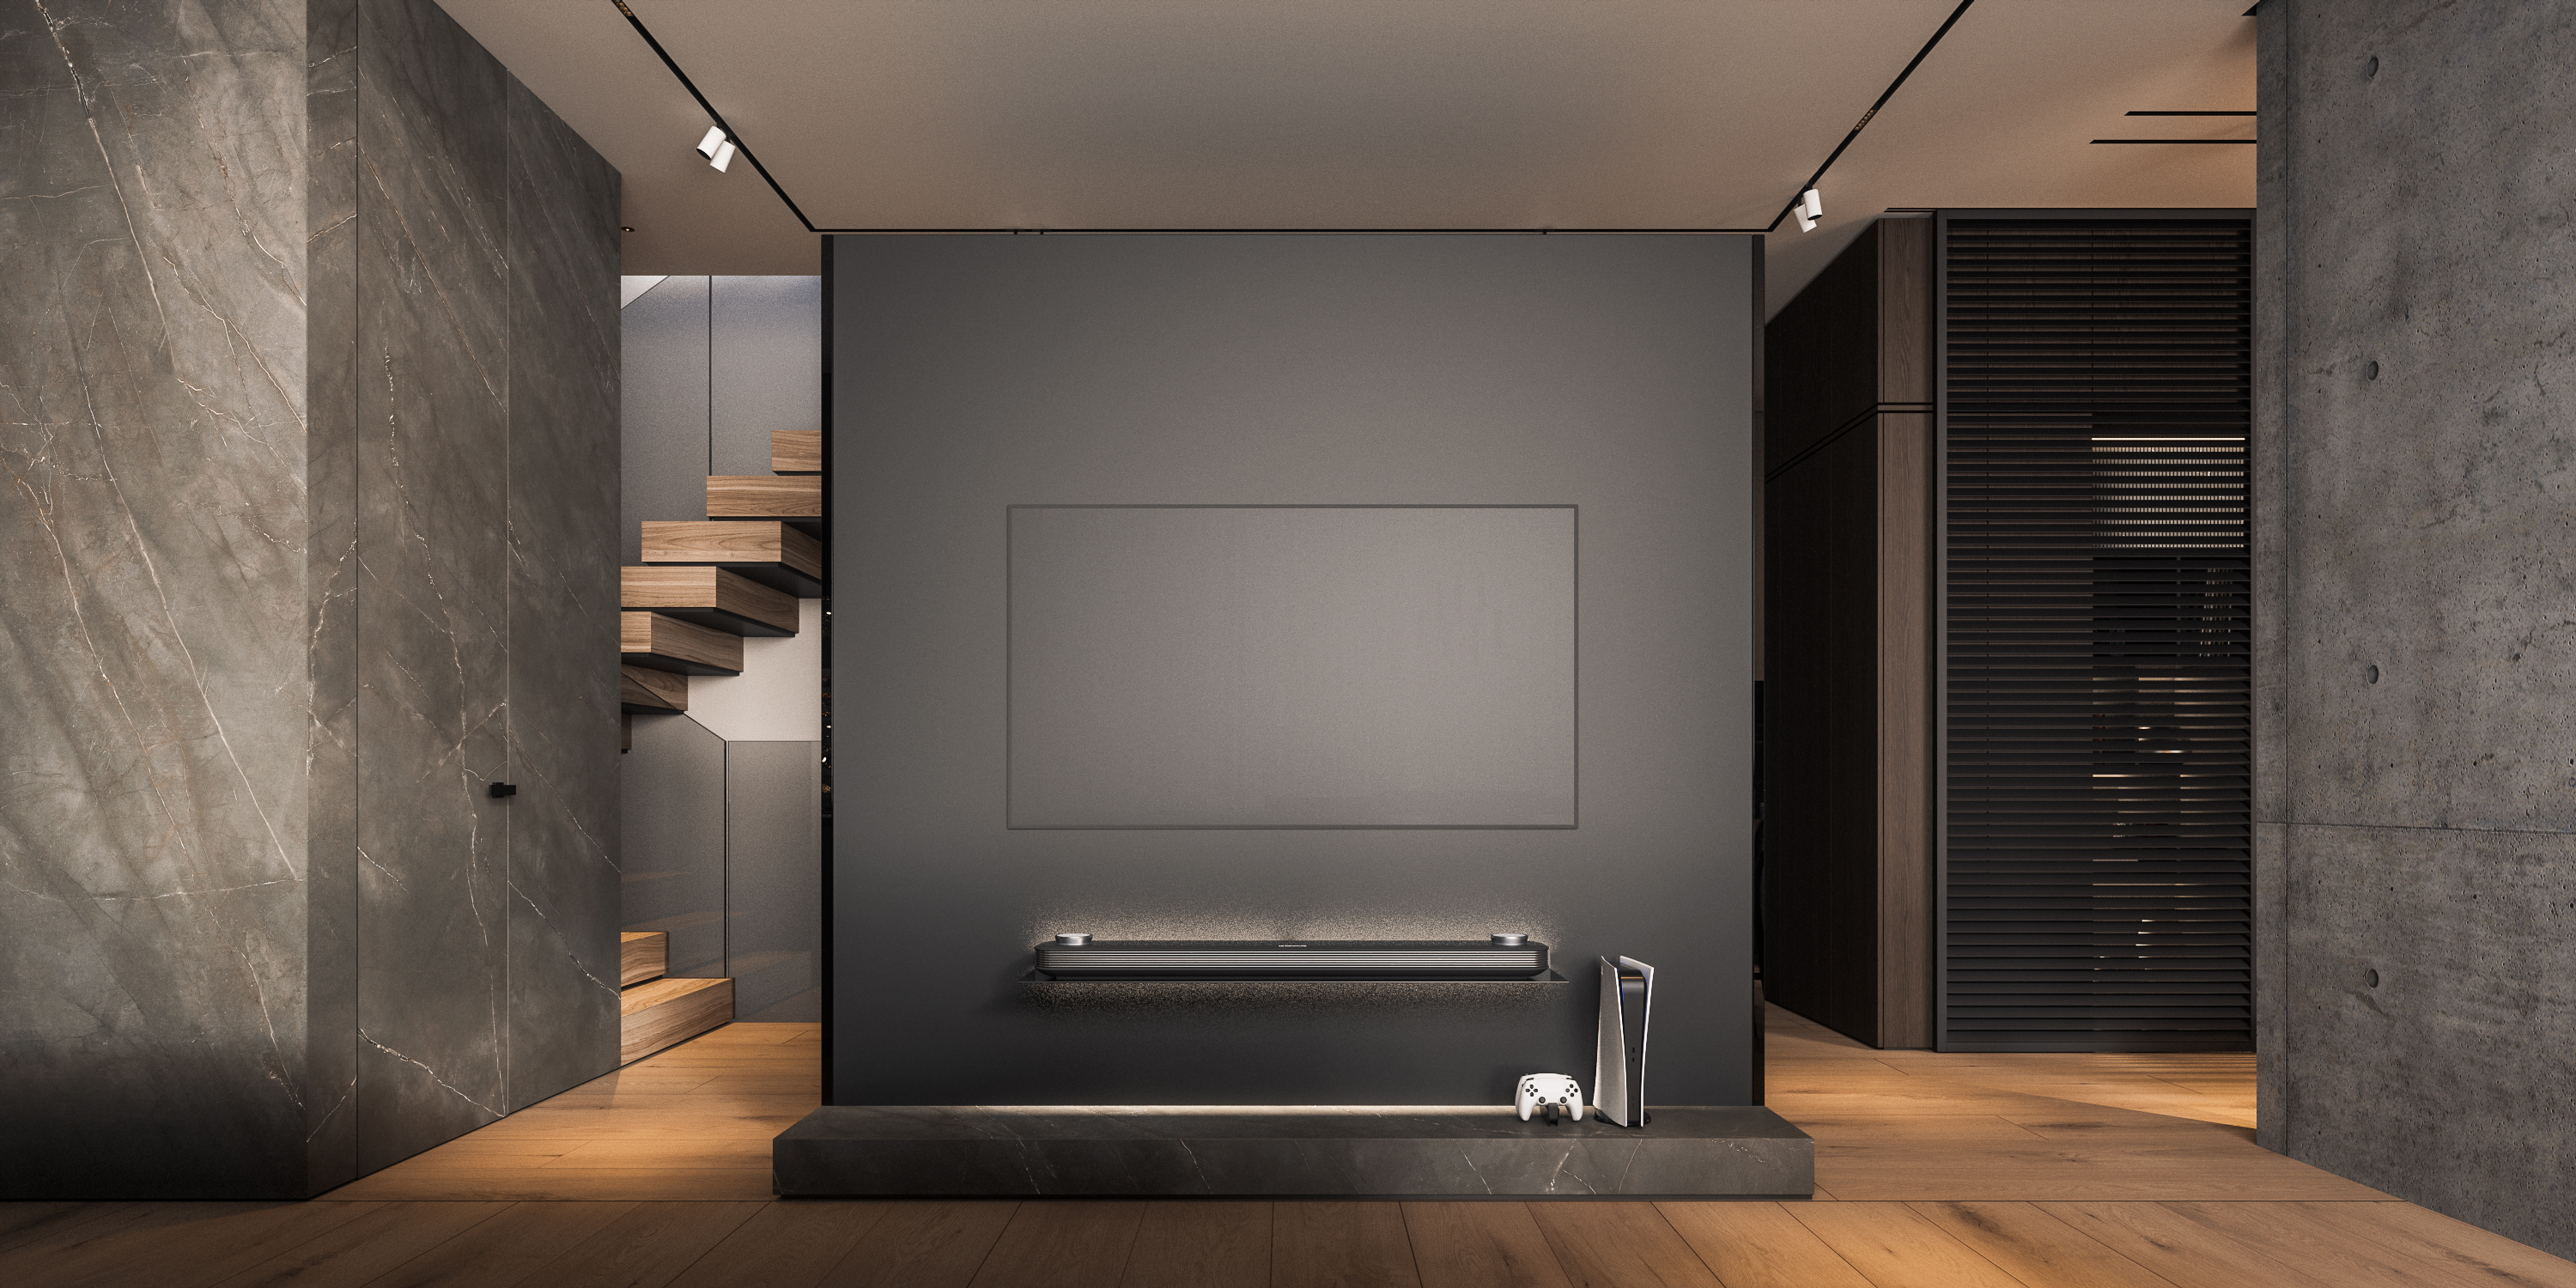 Bucharest Penthouse Interior Design - Poliform Modern Living Room System - Hype Project - arh. Adrian Ianculescu (1)